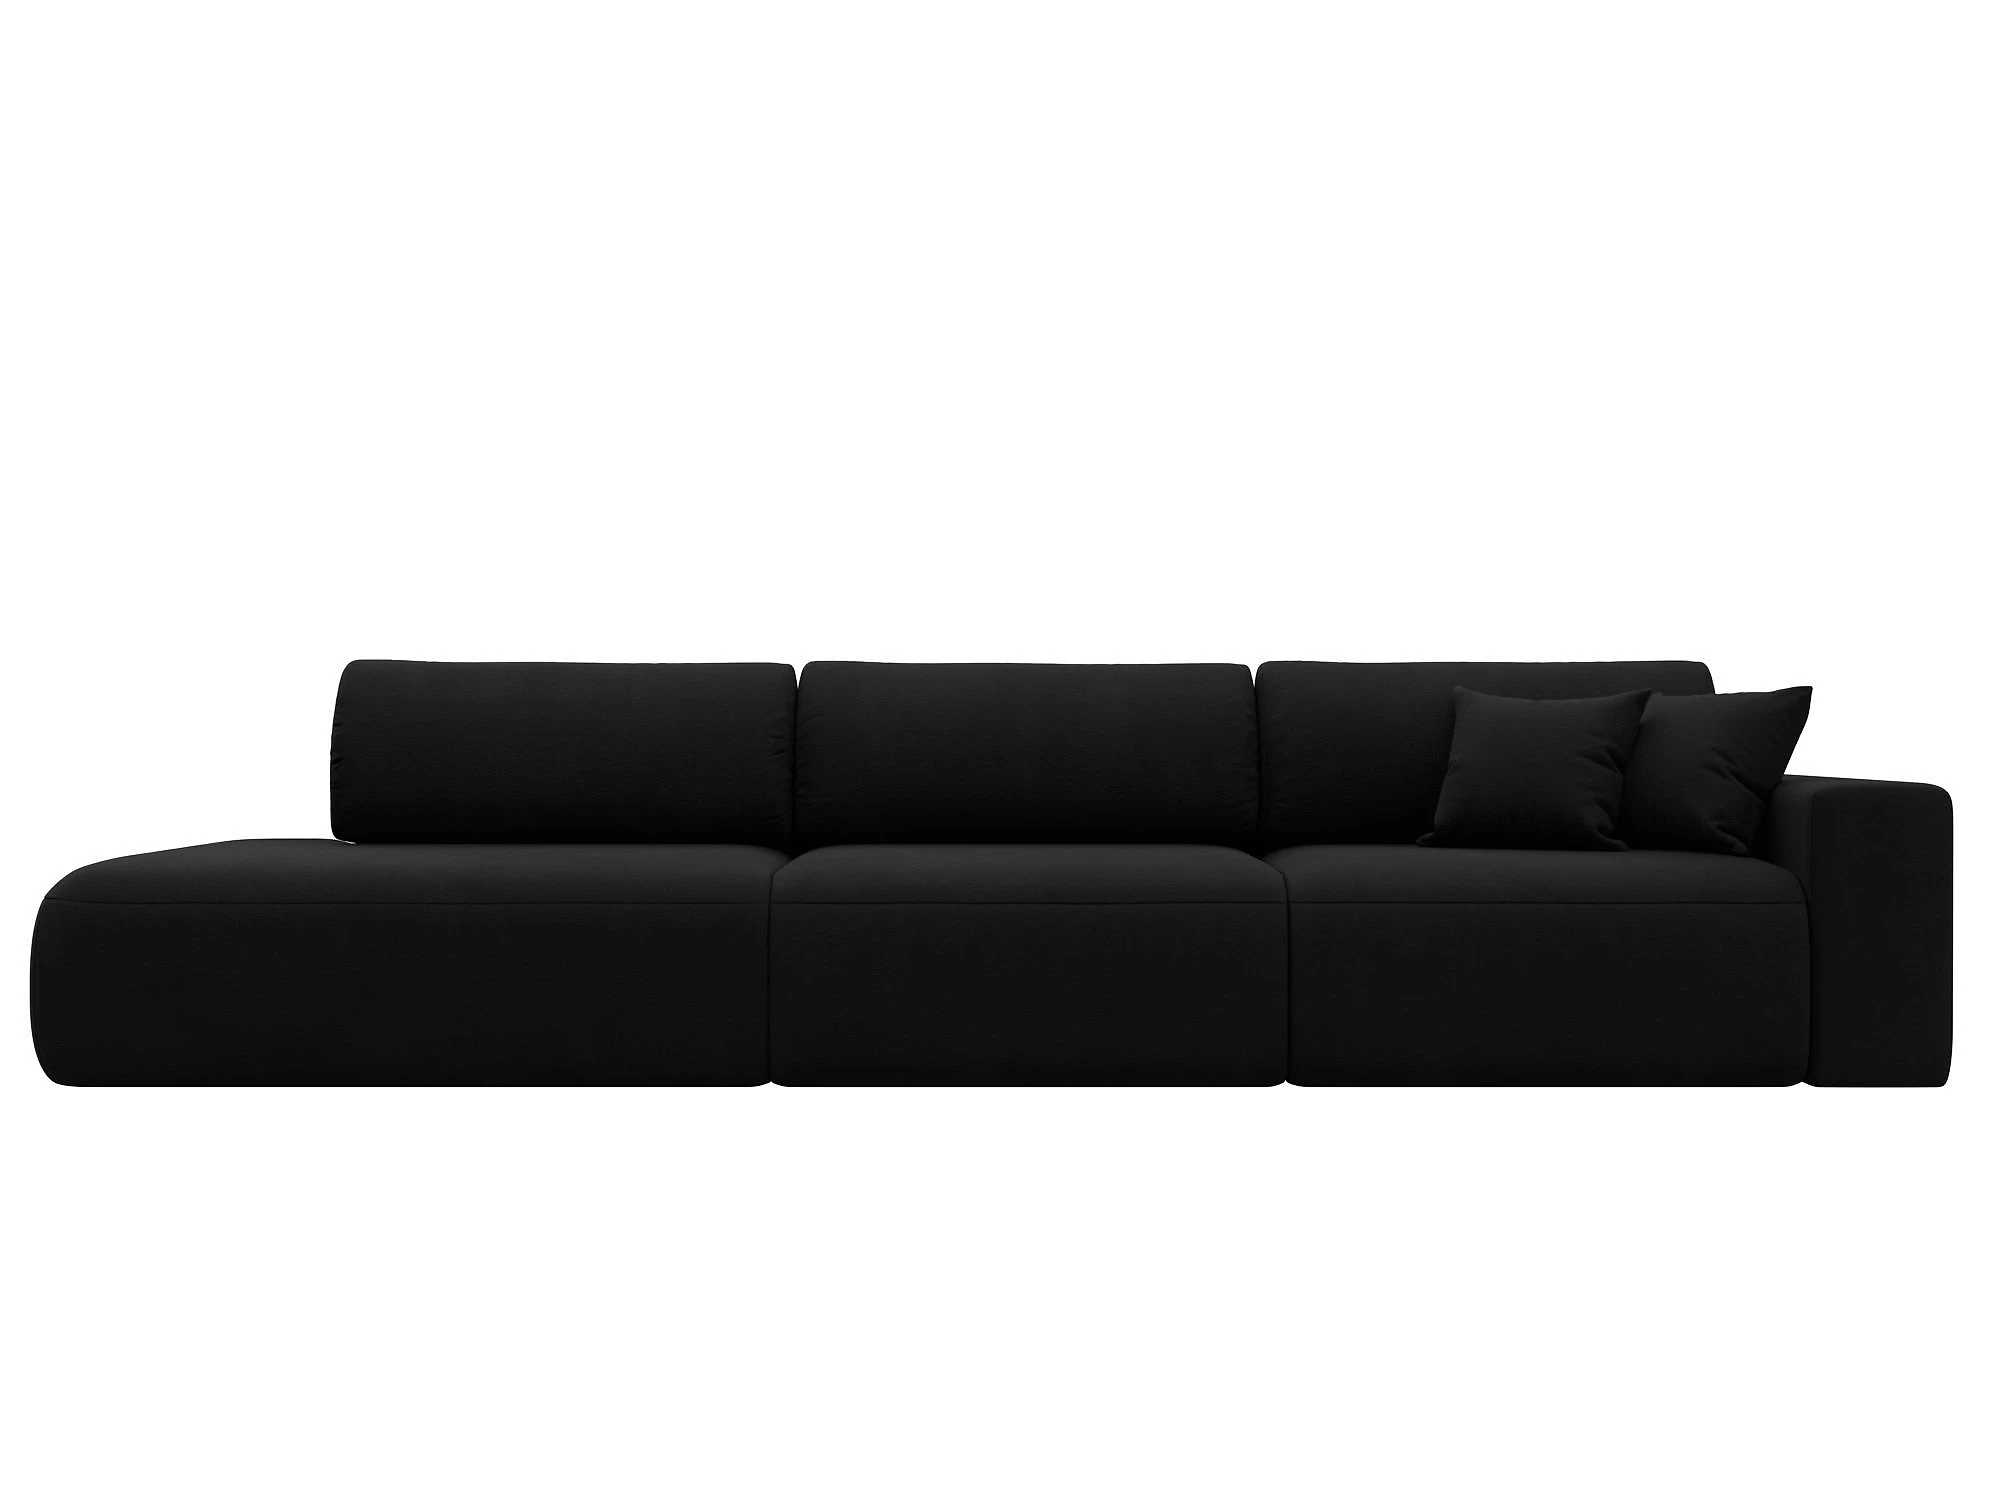 Чёрный диван Лига-036 Модерн Лонг Дизайн 2